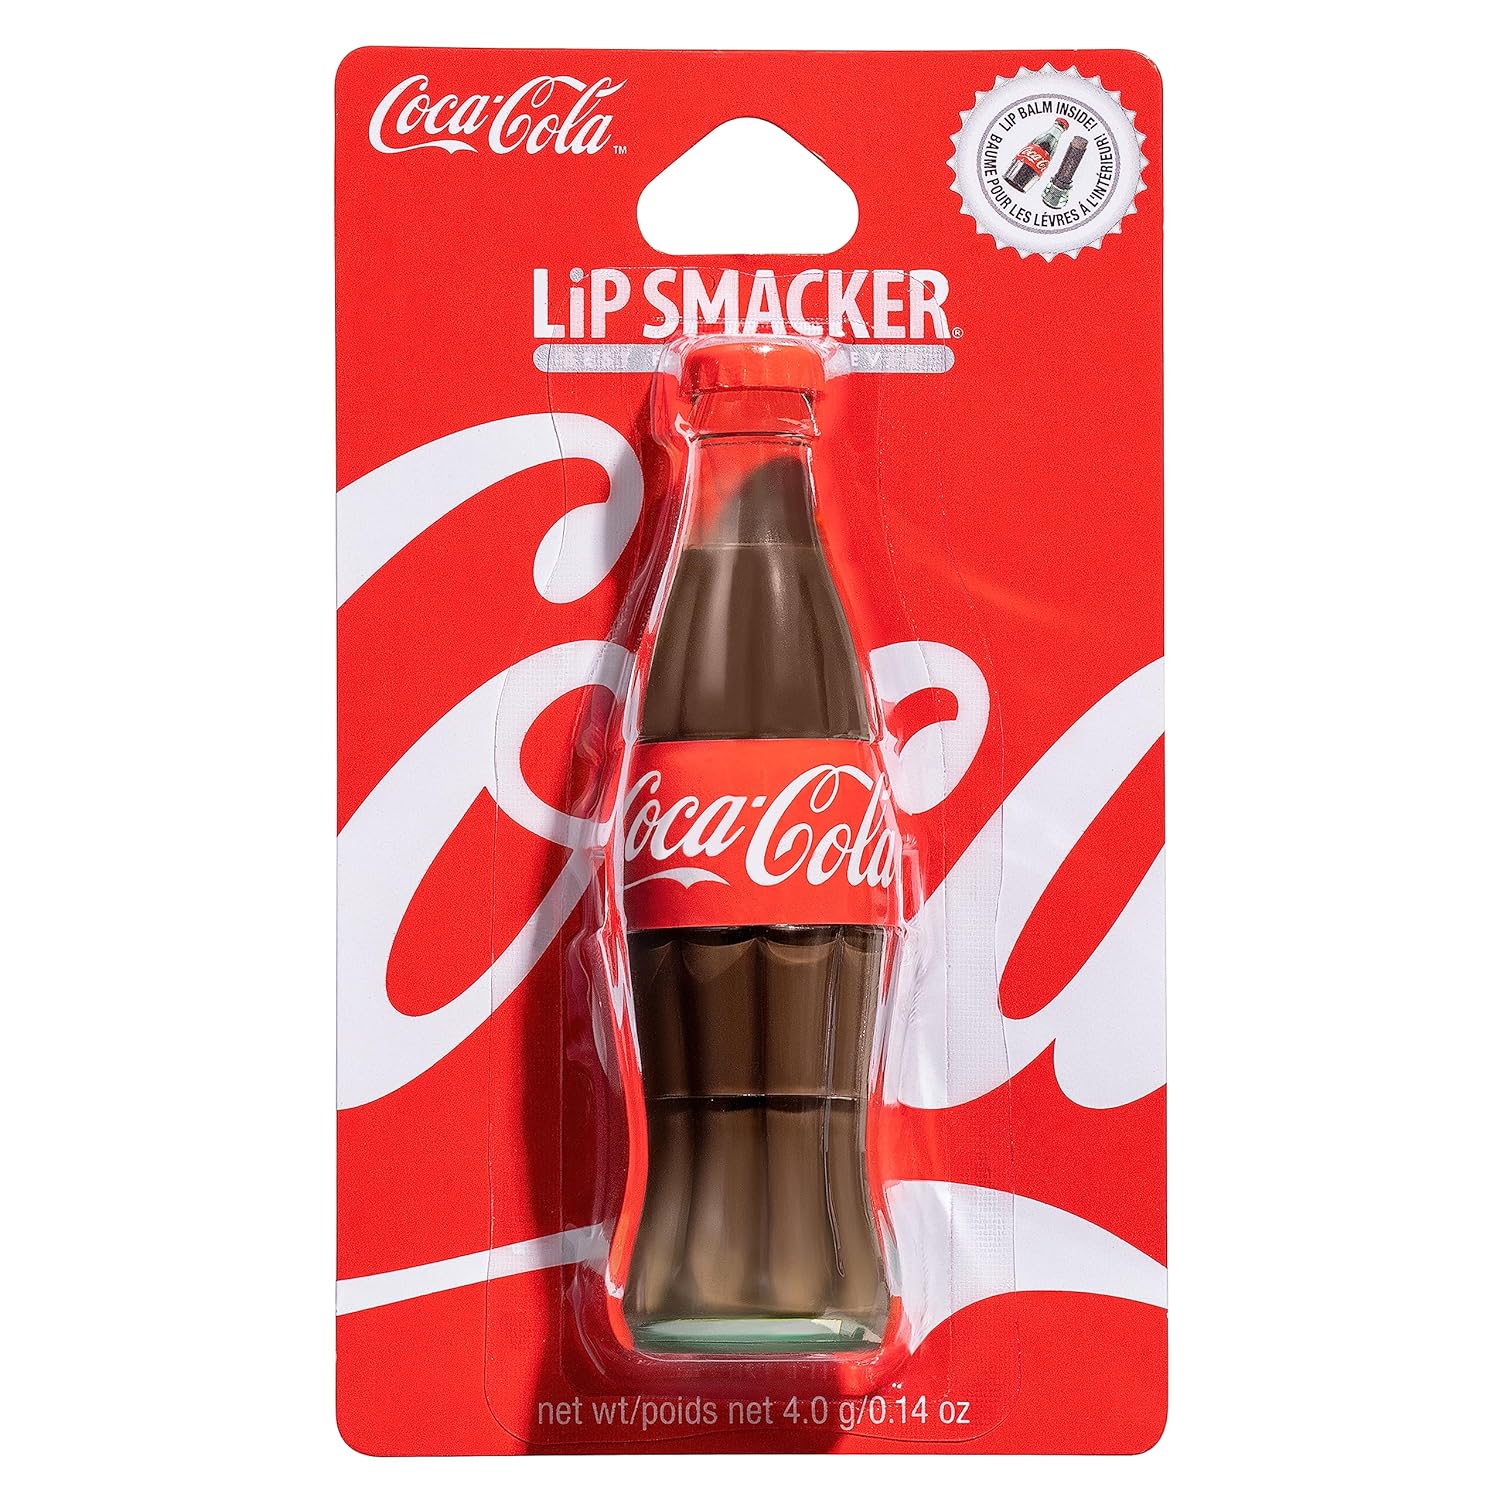 Lip Smacker Coca Cola Collection, lip balm for kids - Classic Coke Bottle Lip Balm : Beauty & Personal Care